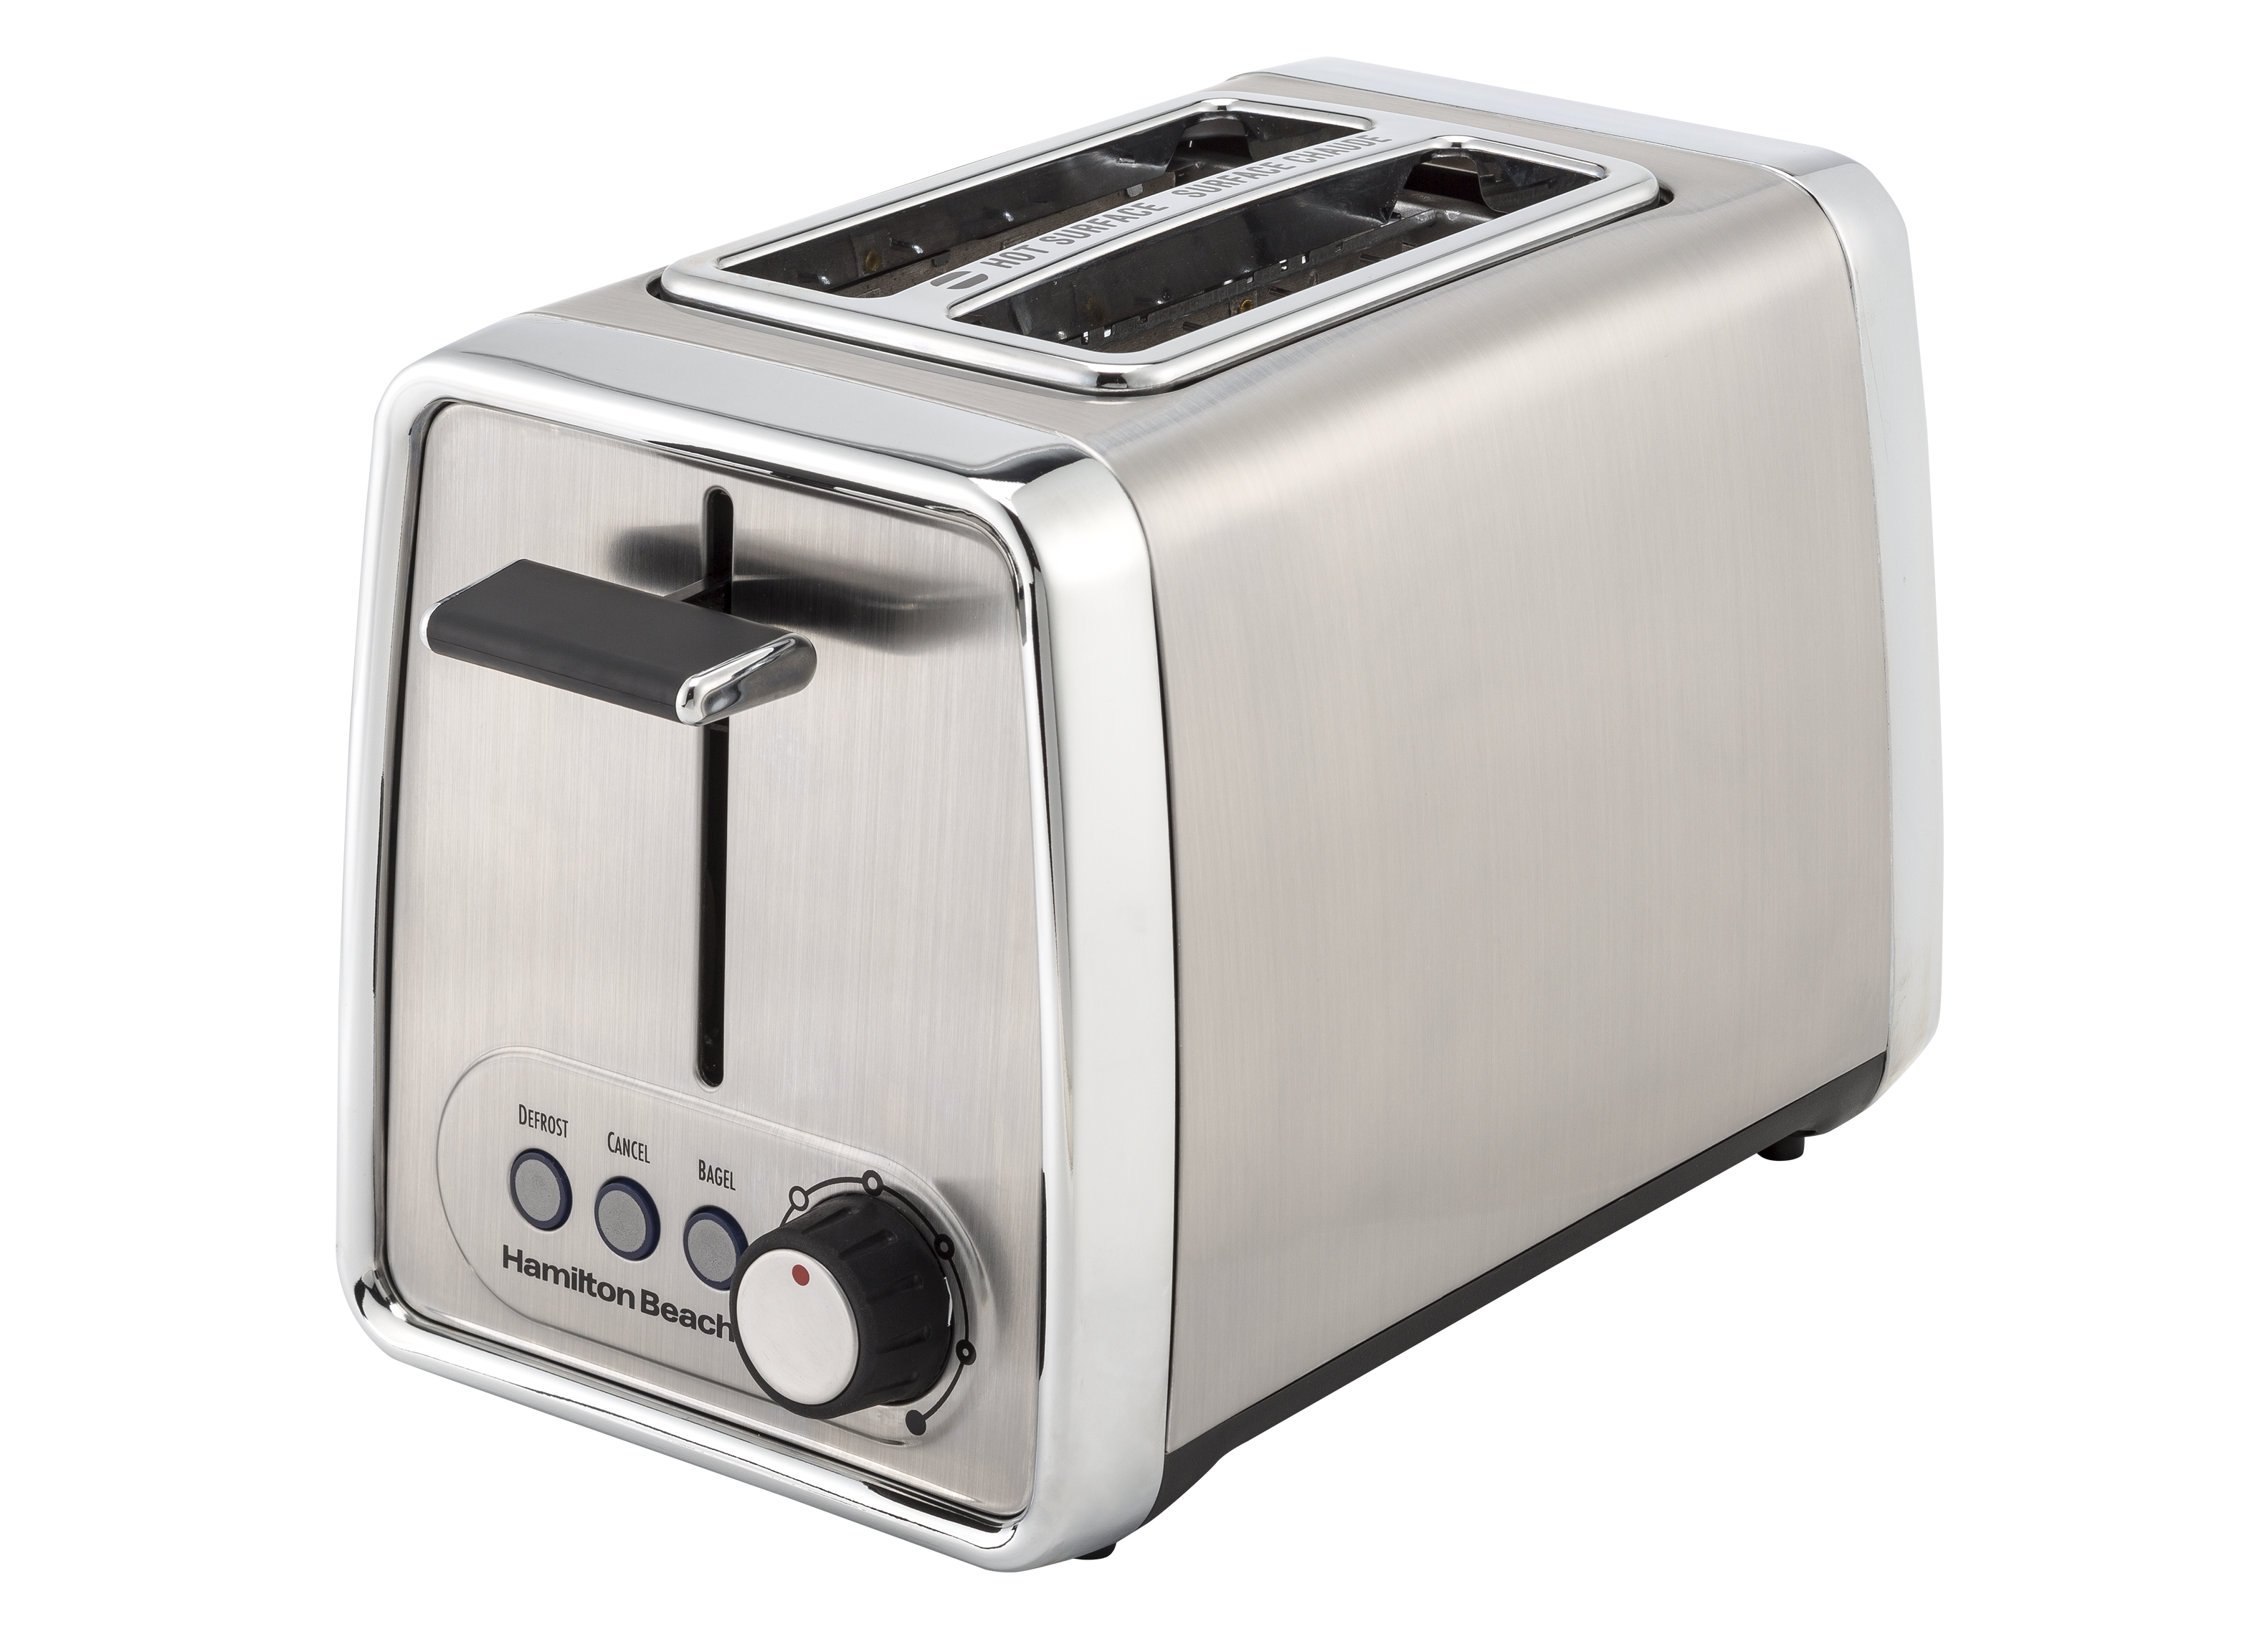 Hamilton Beach Modern Chrome 22791 2-slice Toaster & Toaster Oven